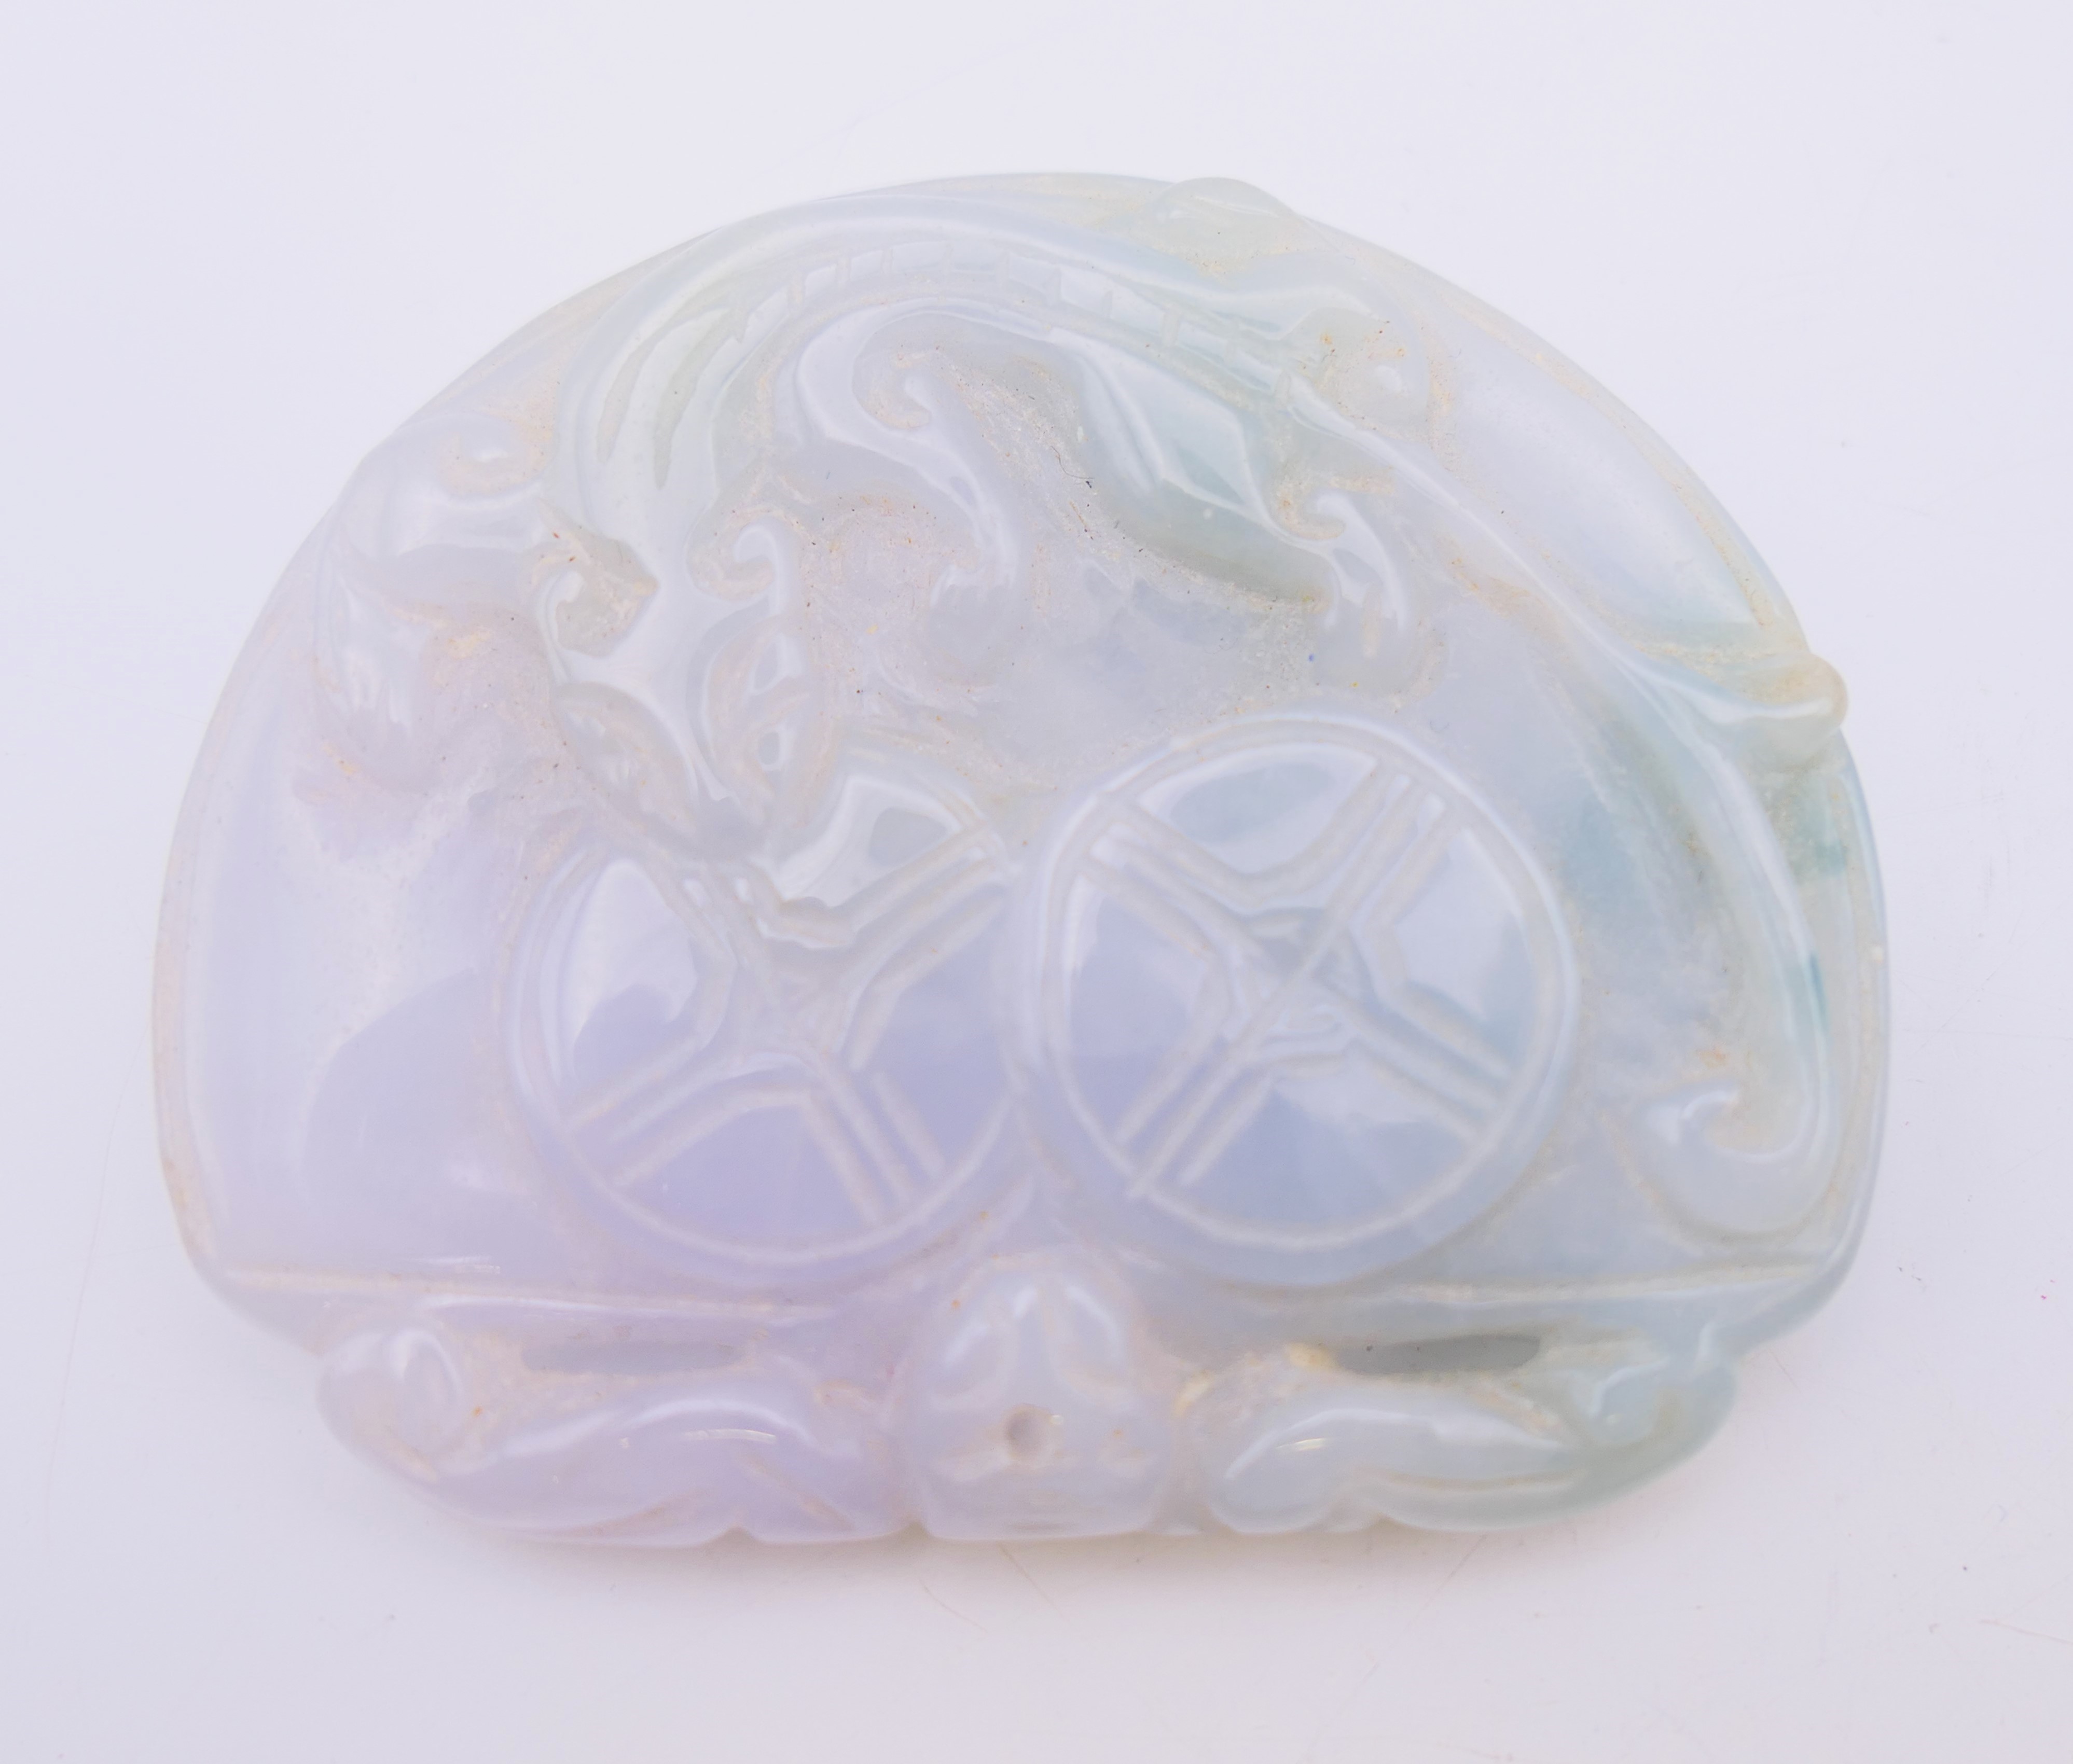 A Chinese jade pendant. 5.5 cm x 4.5 cm.